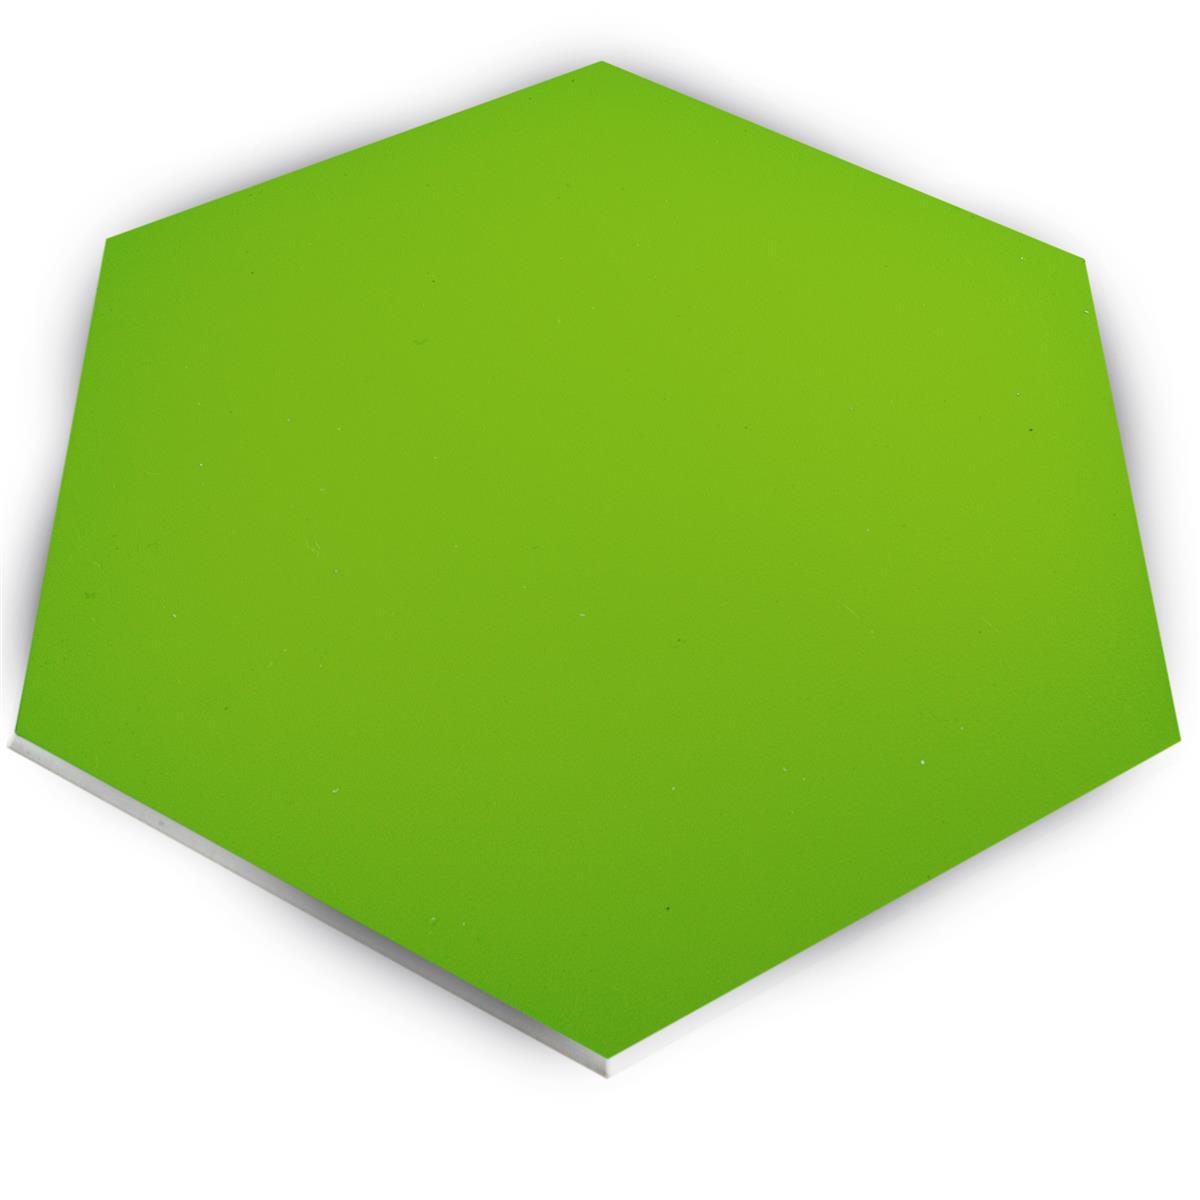 Vinyl Hexagon Wall Tile Century Self Adhesive Green